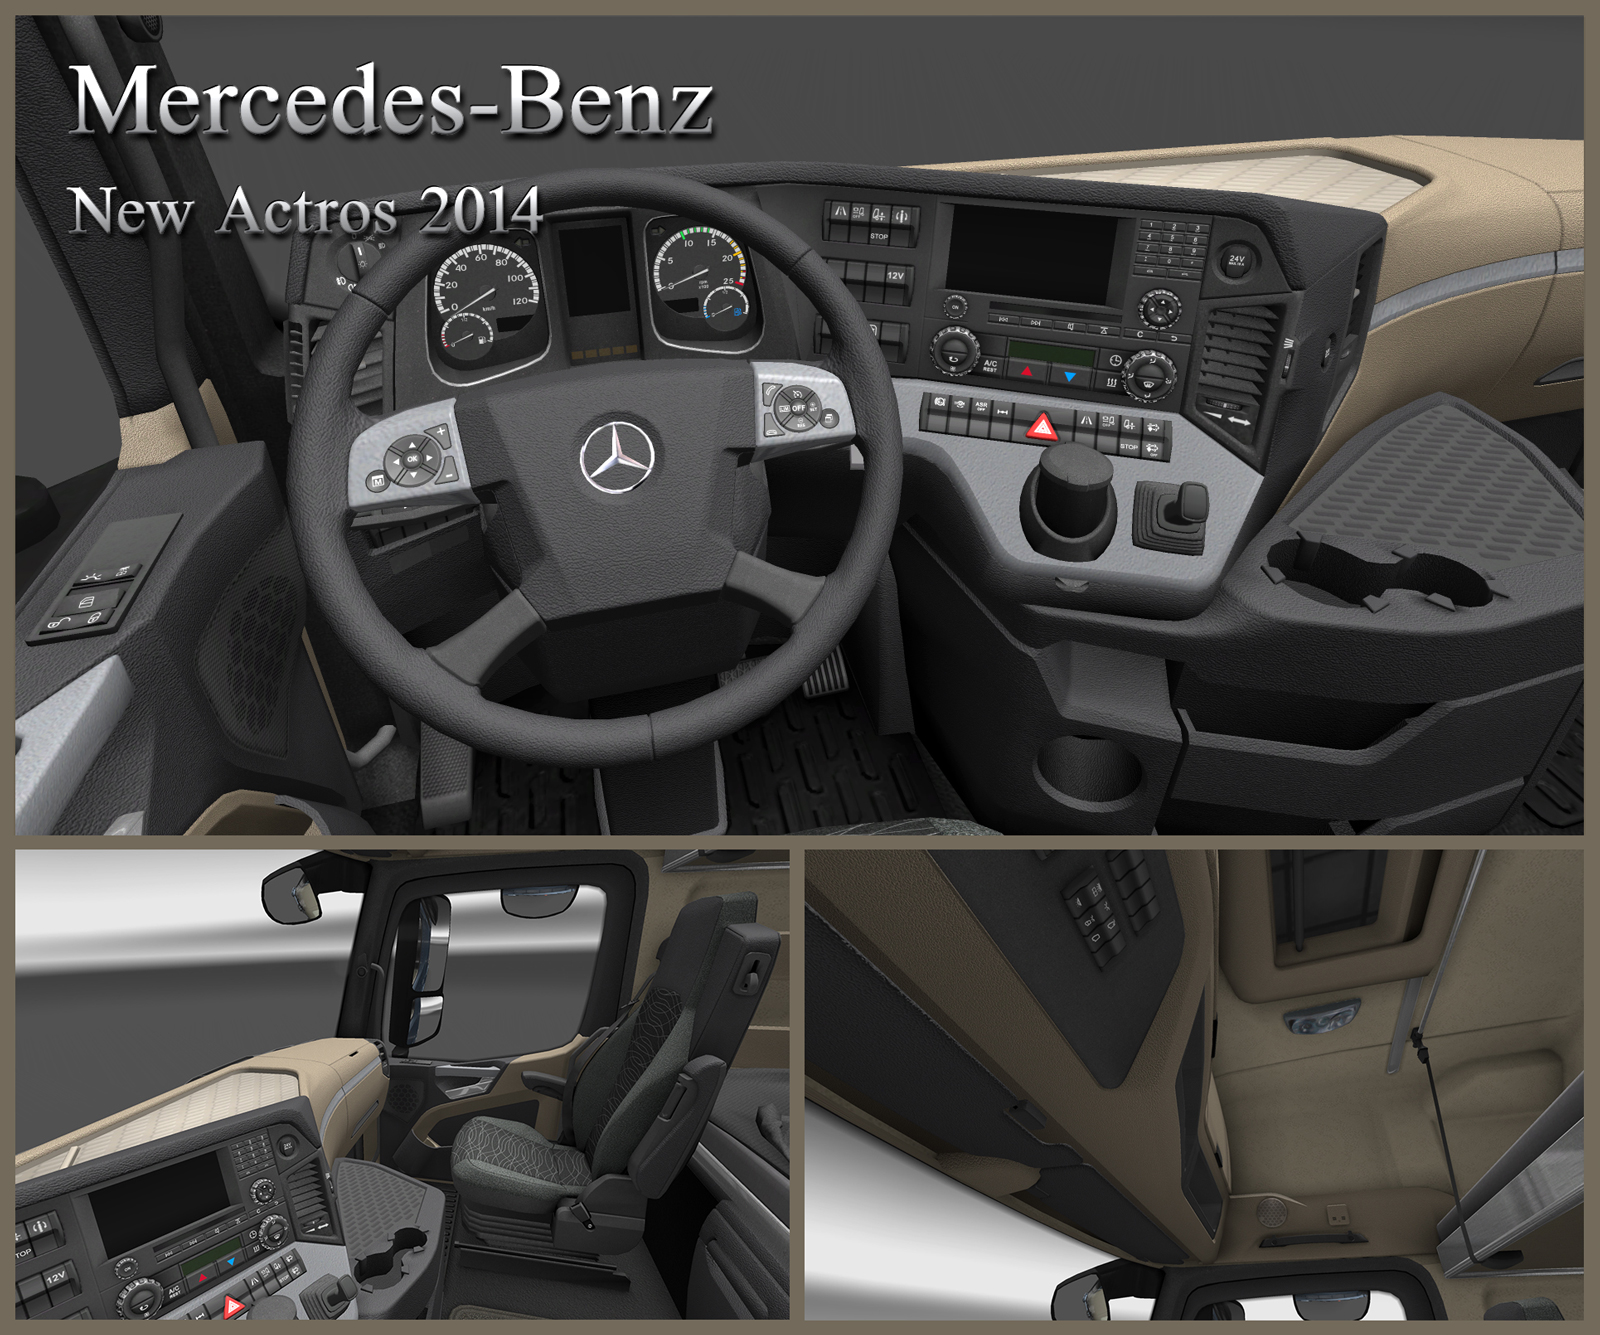 MB-New-Actros-2014-Interior.jpg